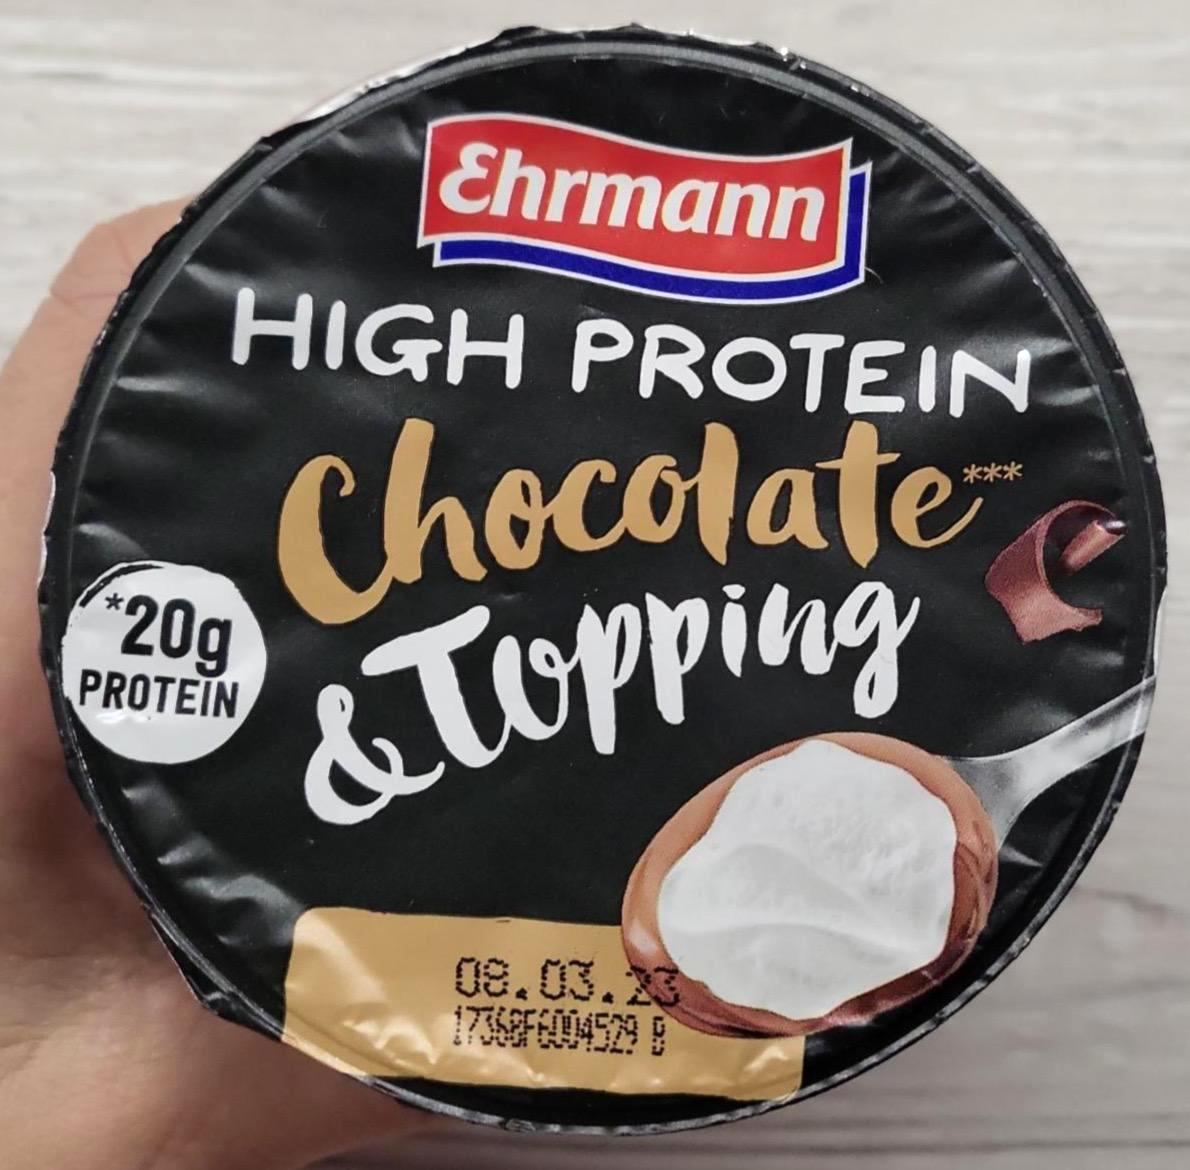 Képek - High Protein Chocolate & Topping Ehrmann